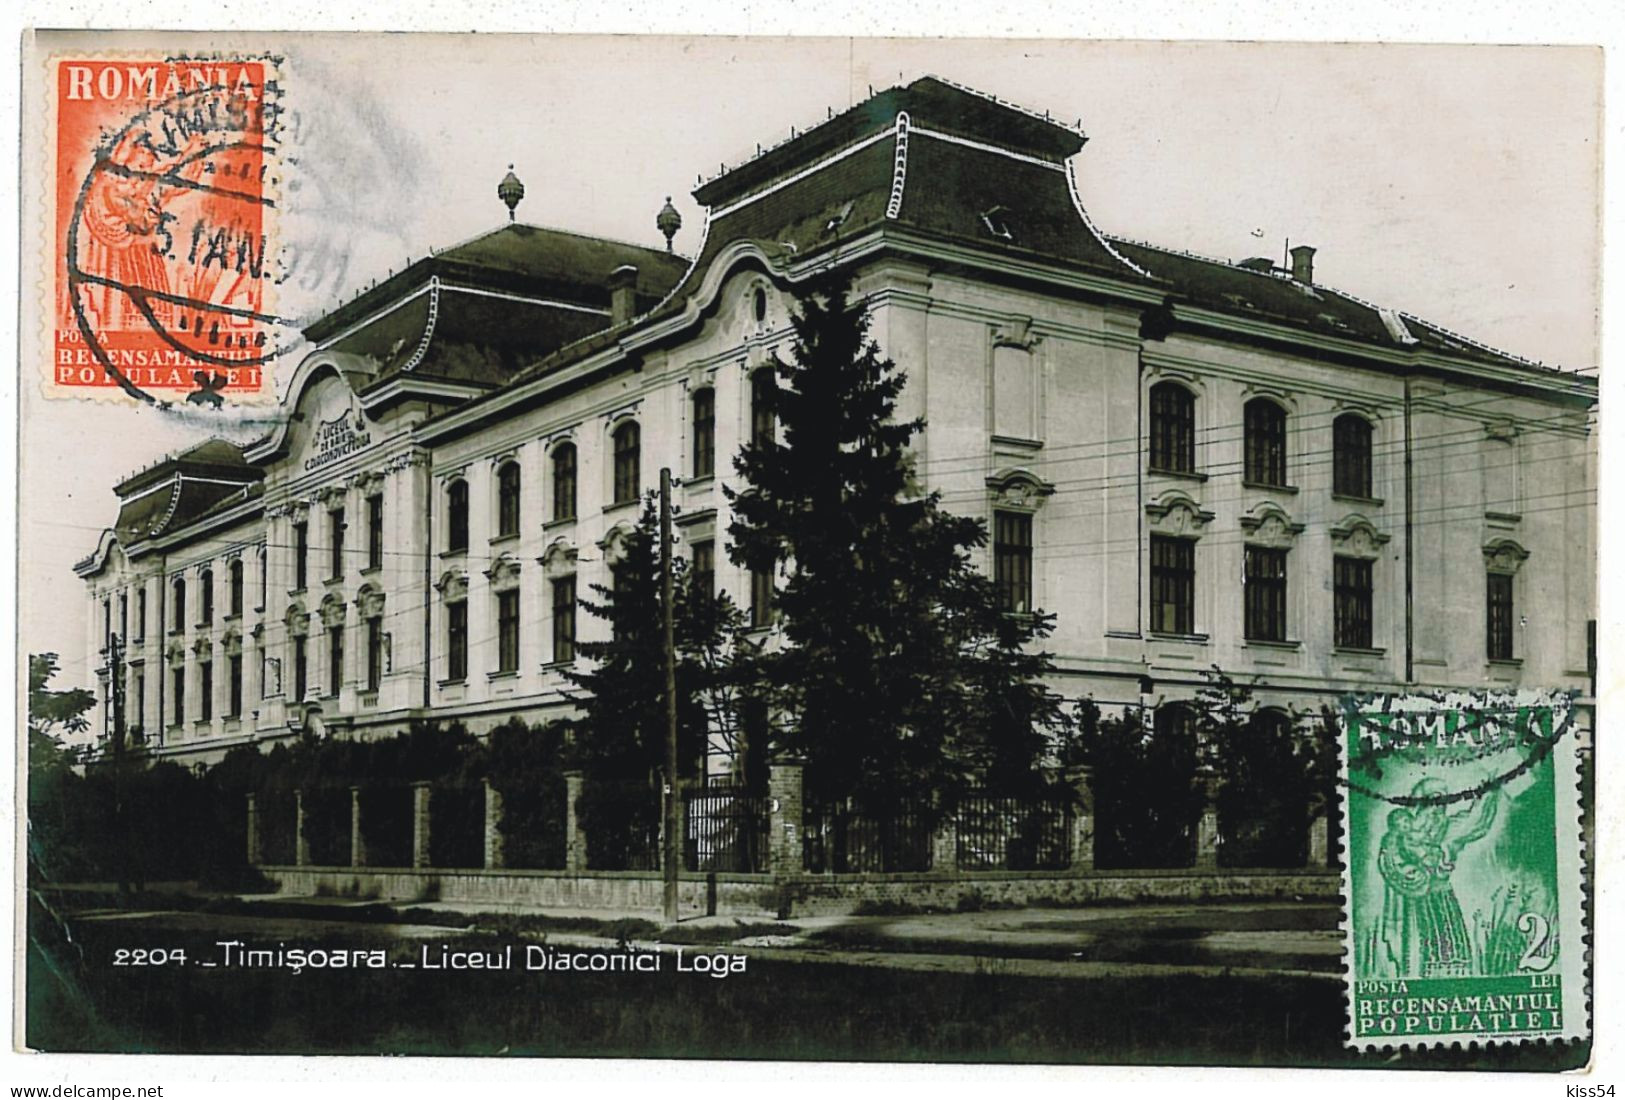 RO 47 - 5495 TIMISOARA, High School LOGA, Romania - Old Postcard, Real Photo - Used - 1931 - TCV - Roumanie